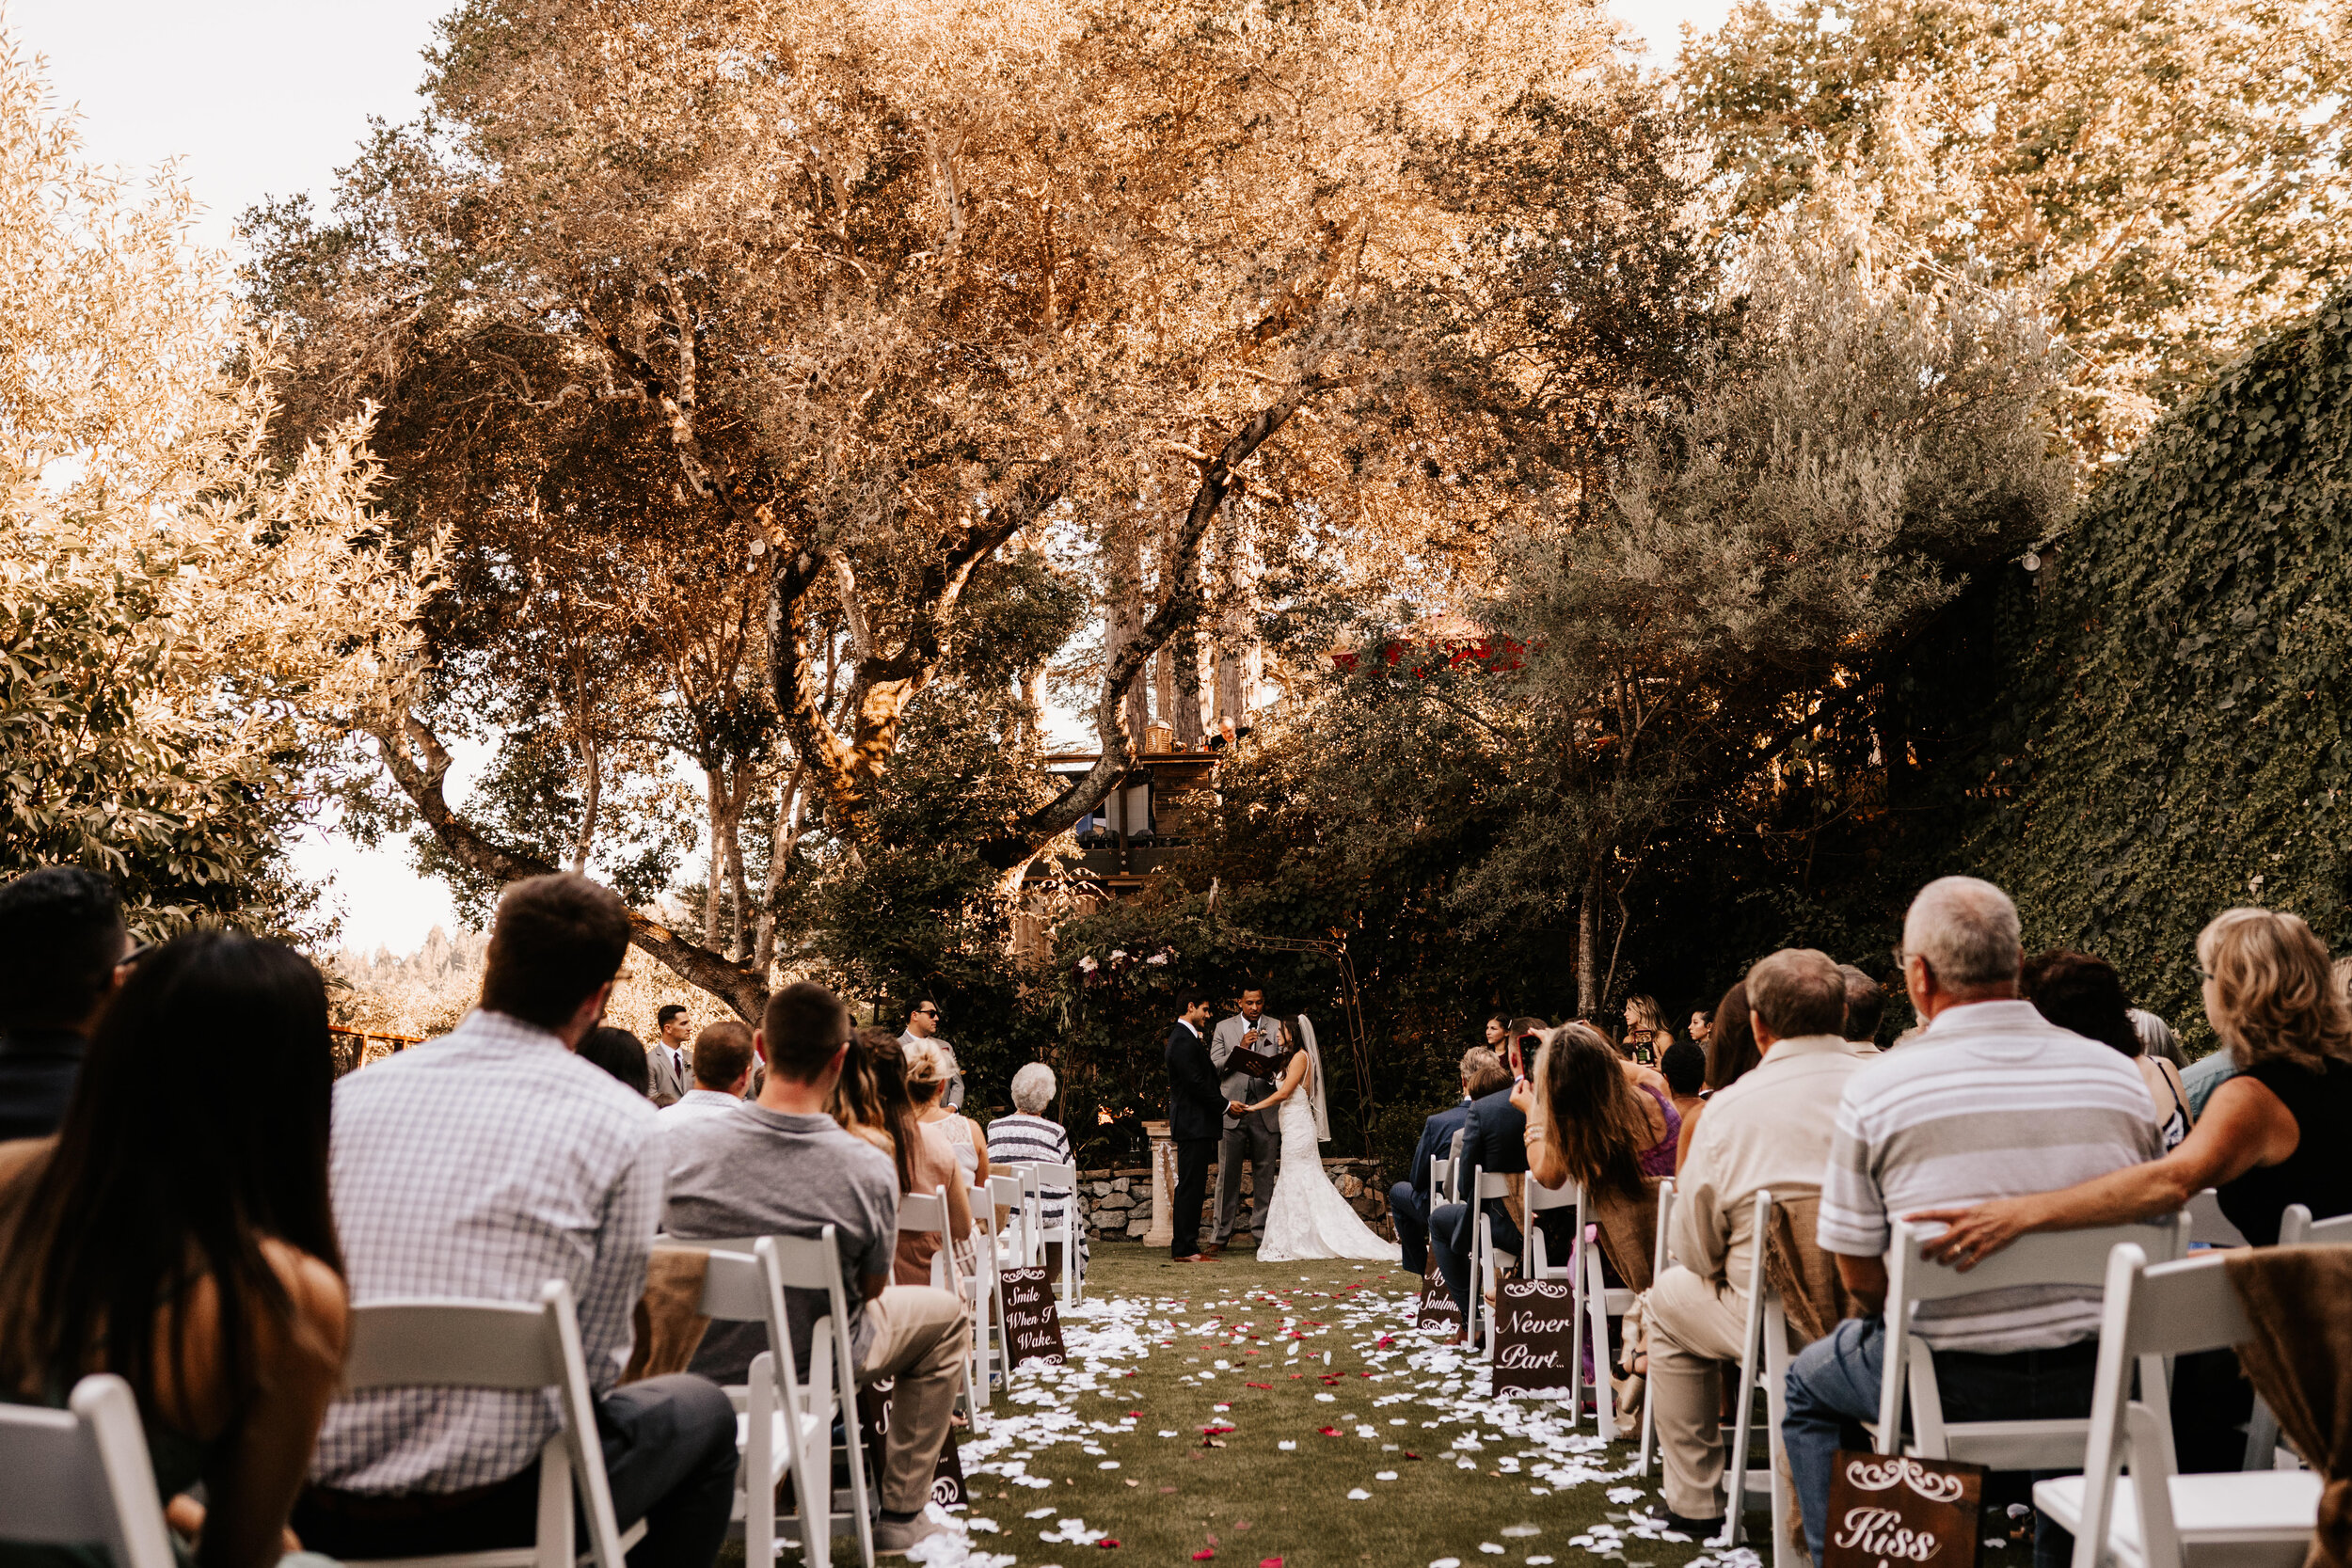 Kylee + Andrew -  Ross, California Backyard Summer Wedding128.jpg